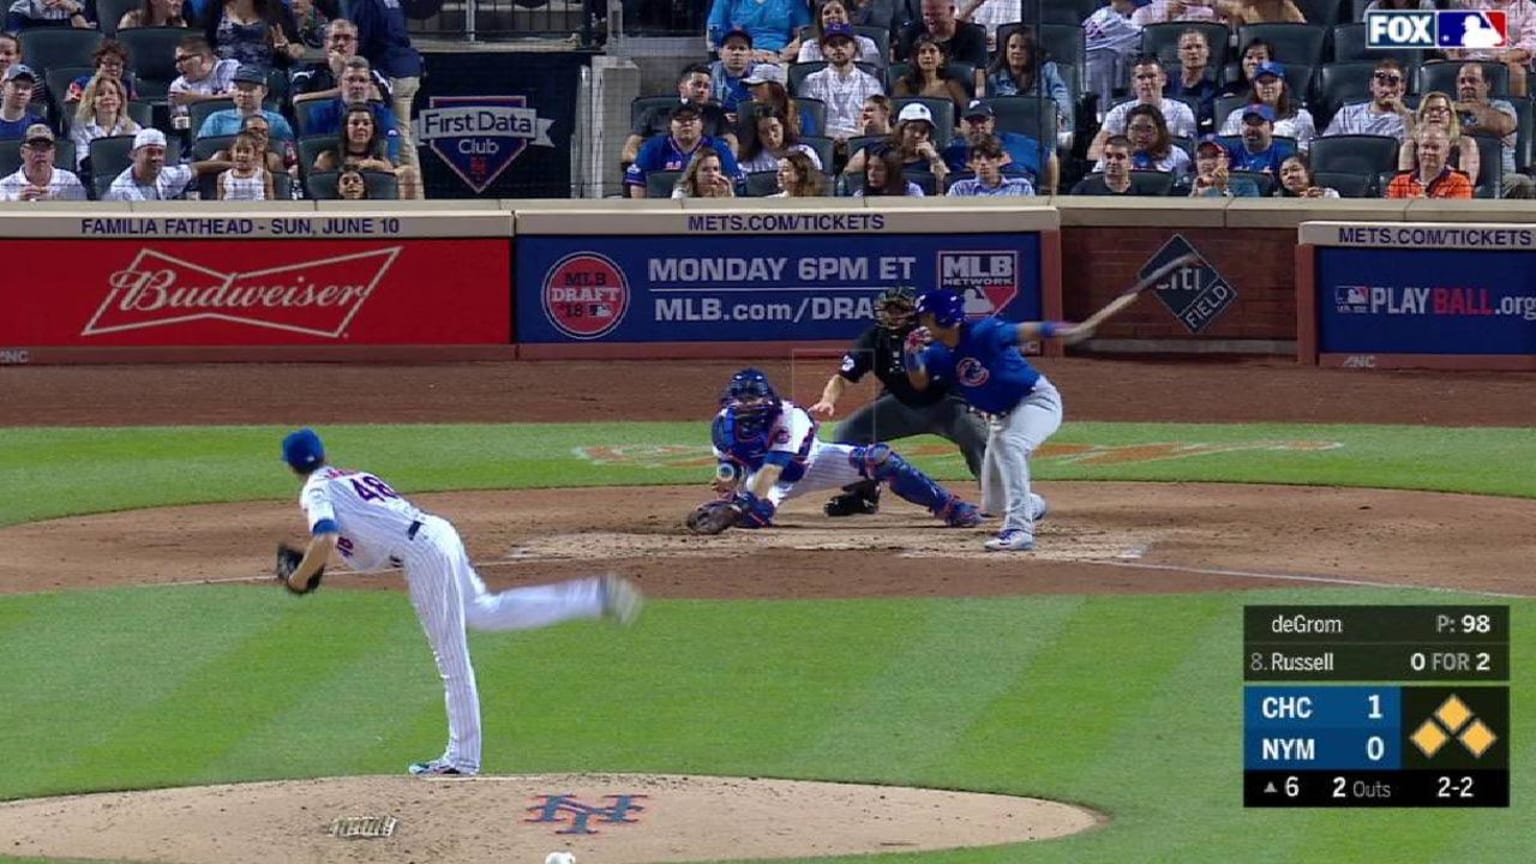 INCREDIBLE Huge New York Mets / Budweiser Wooden Display Baseball